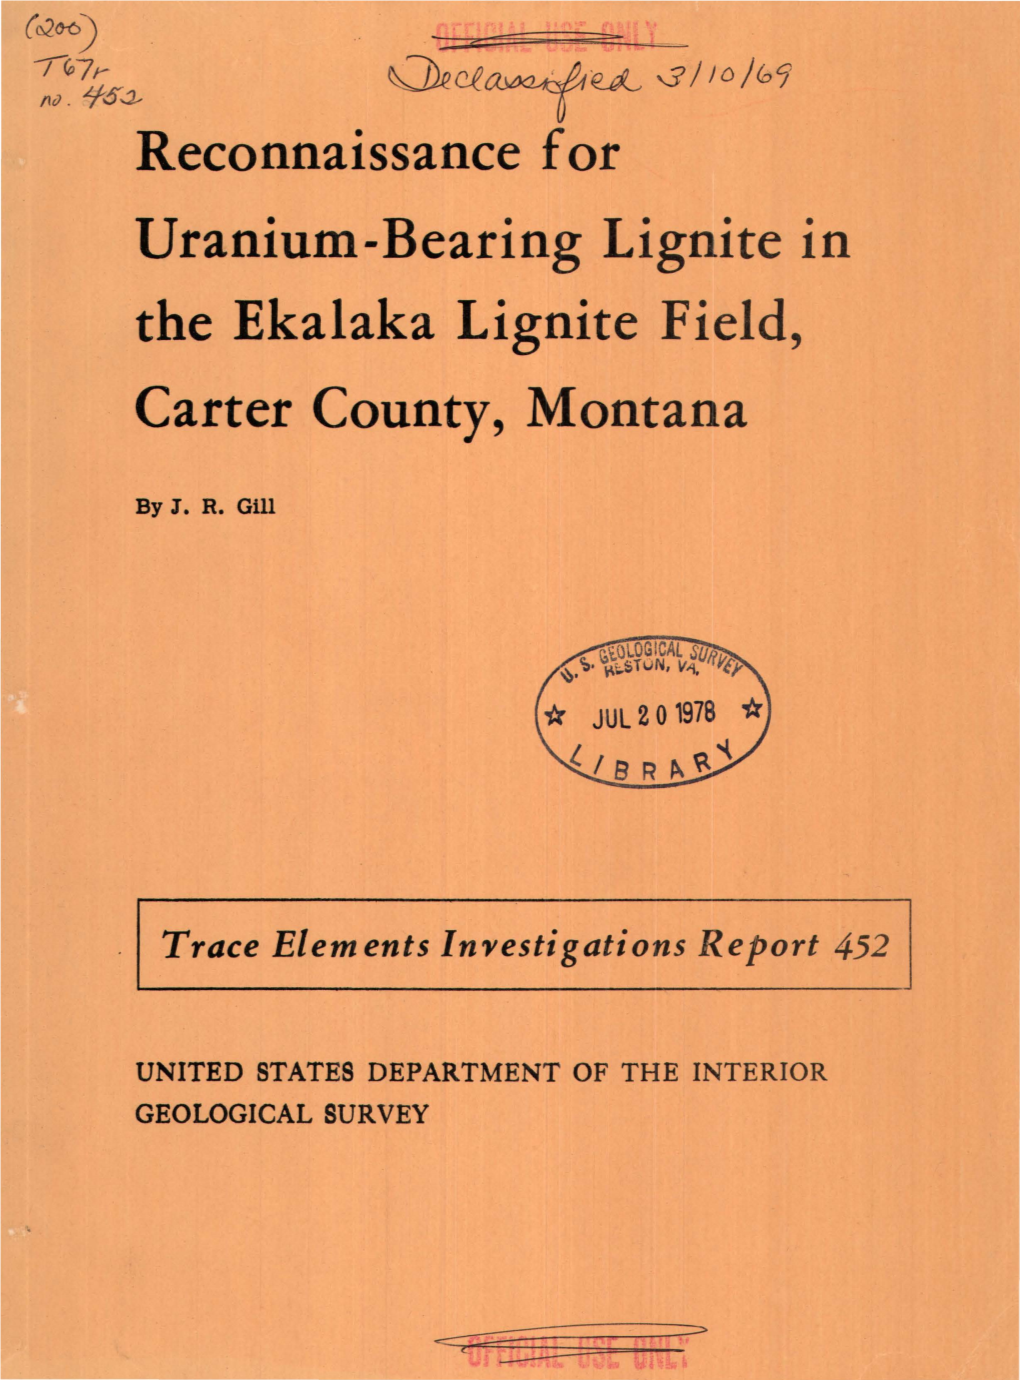 Reconnaissance for Uranium-Bearing Lignite in the Ekalaka Lignite Field, Carter County, Montana